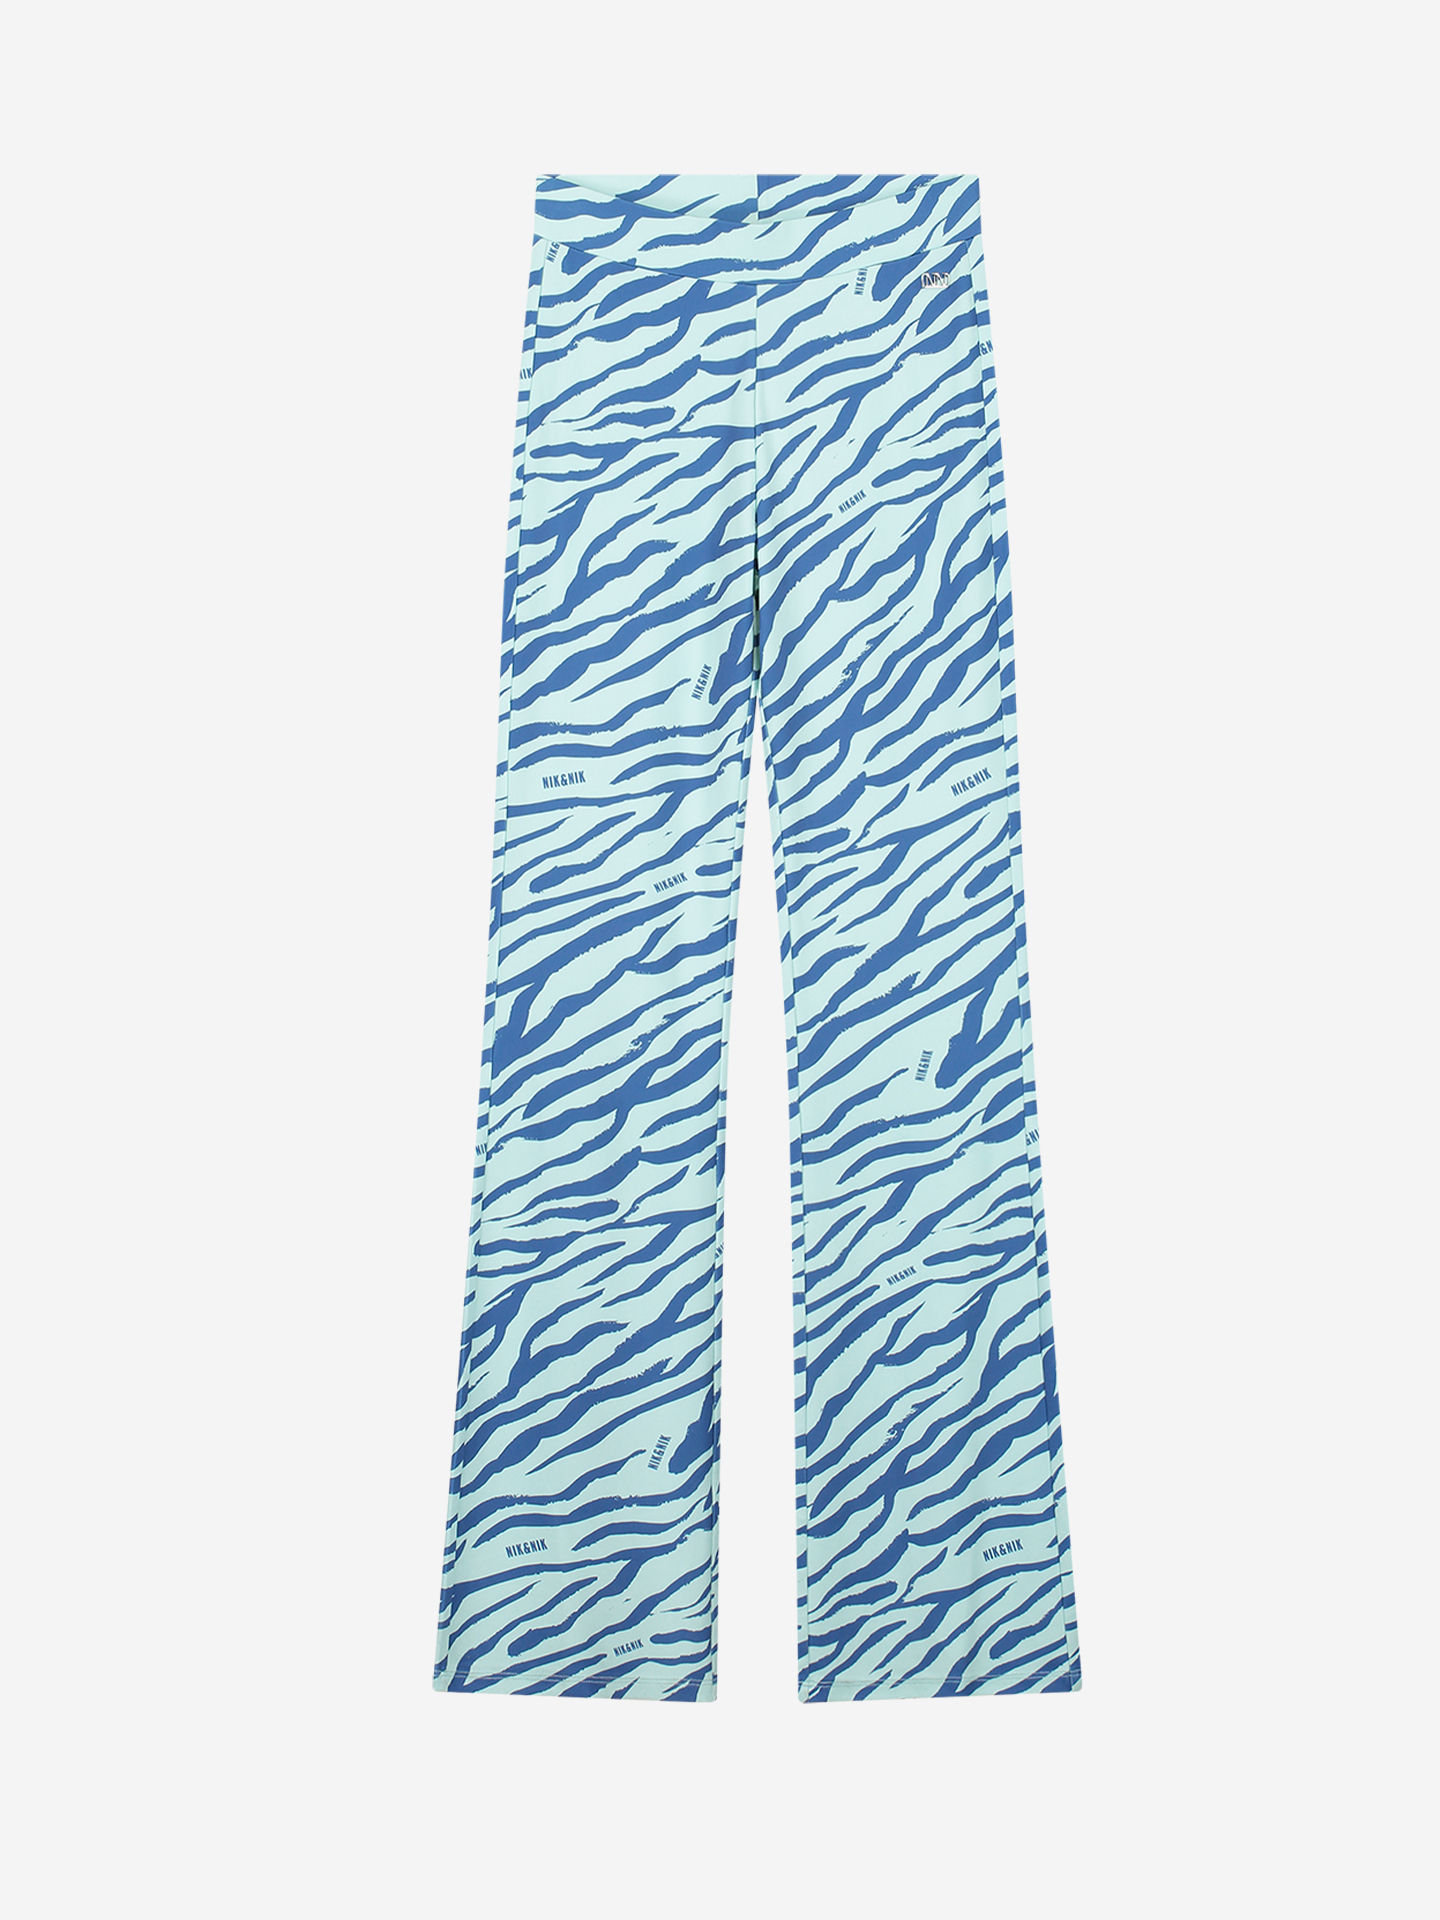 Zebra Flared Pants